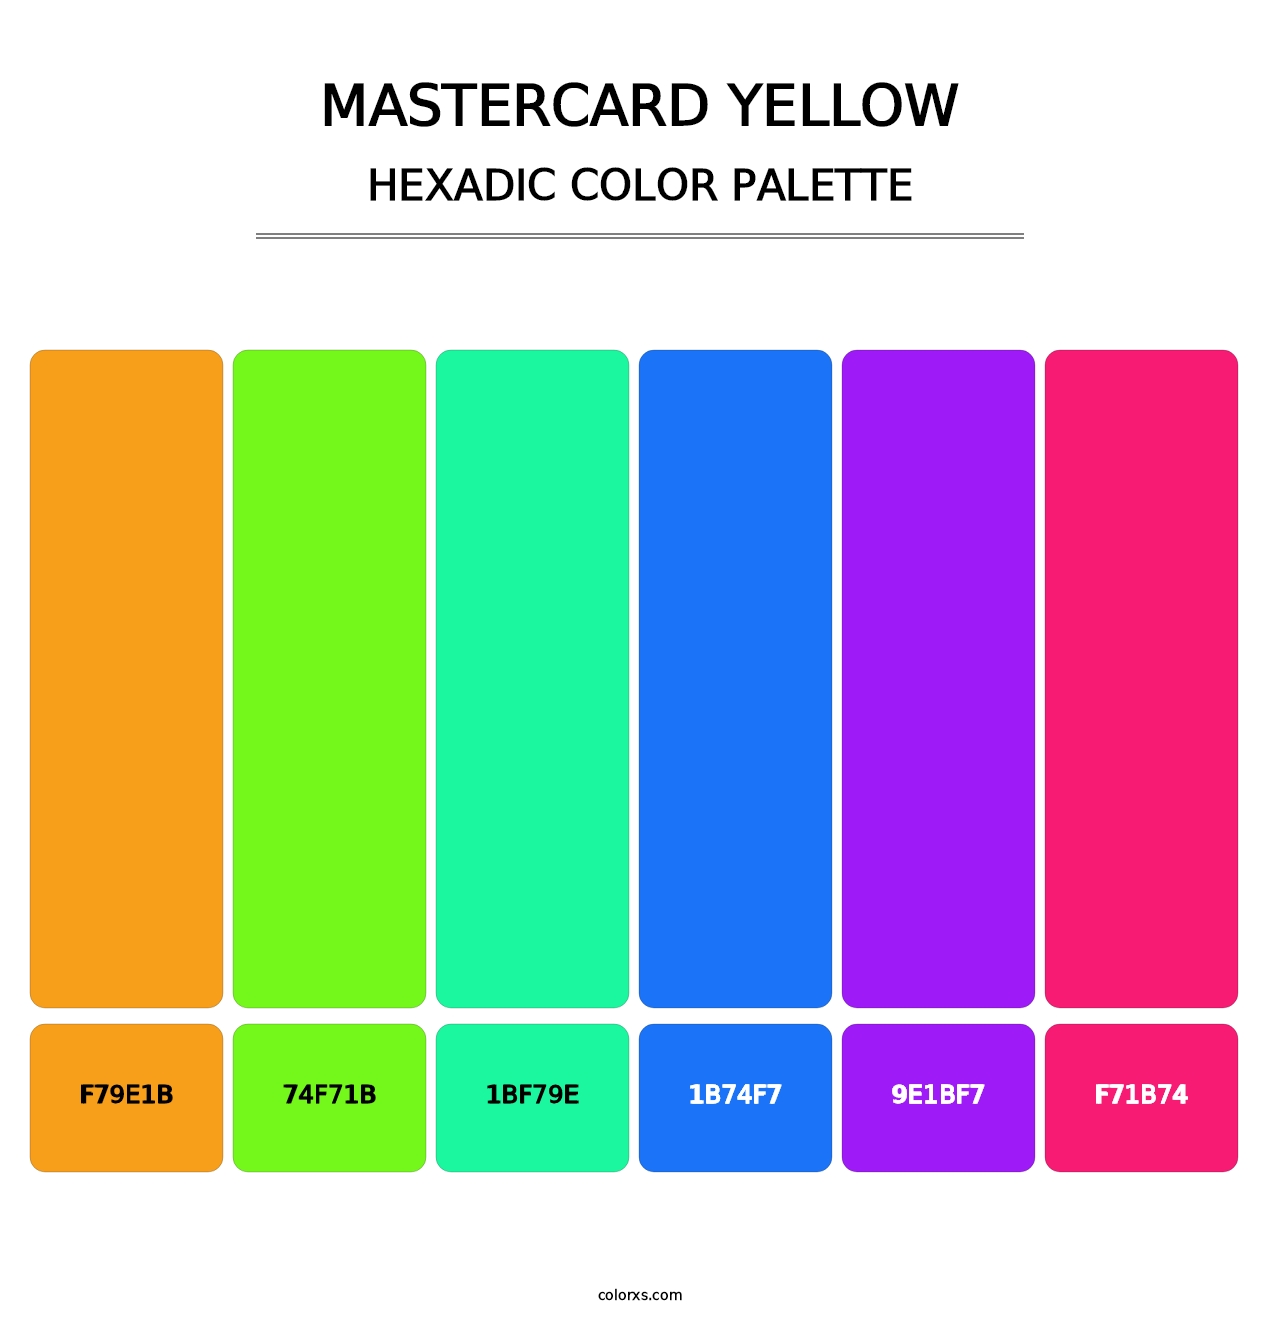 Mastercard Yellow - Hexadic Color Palette